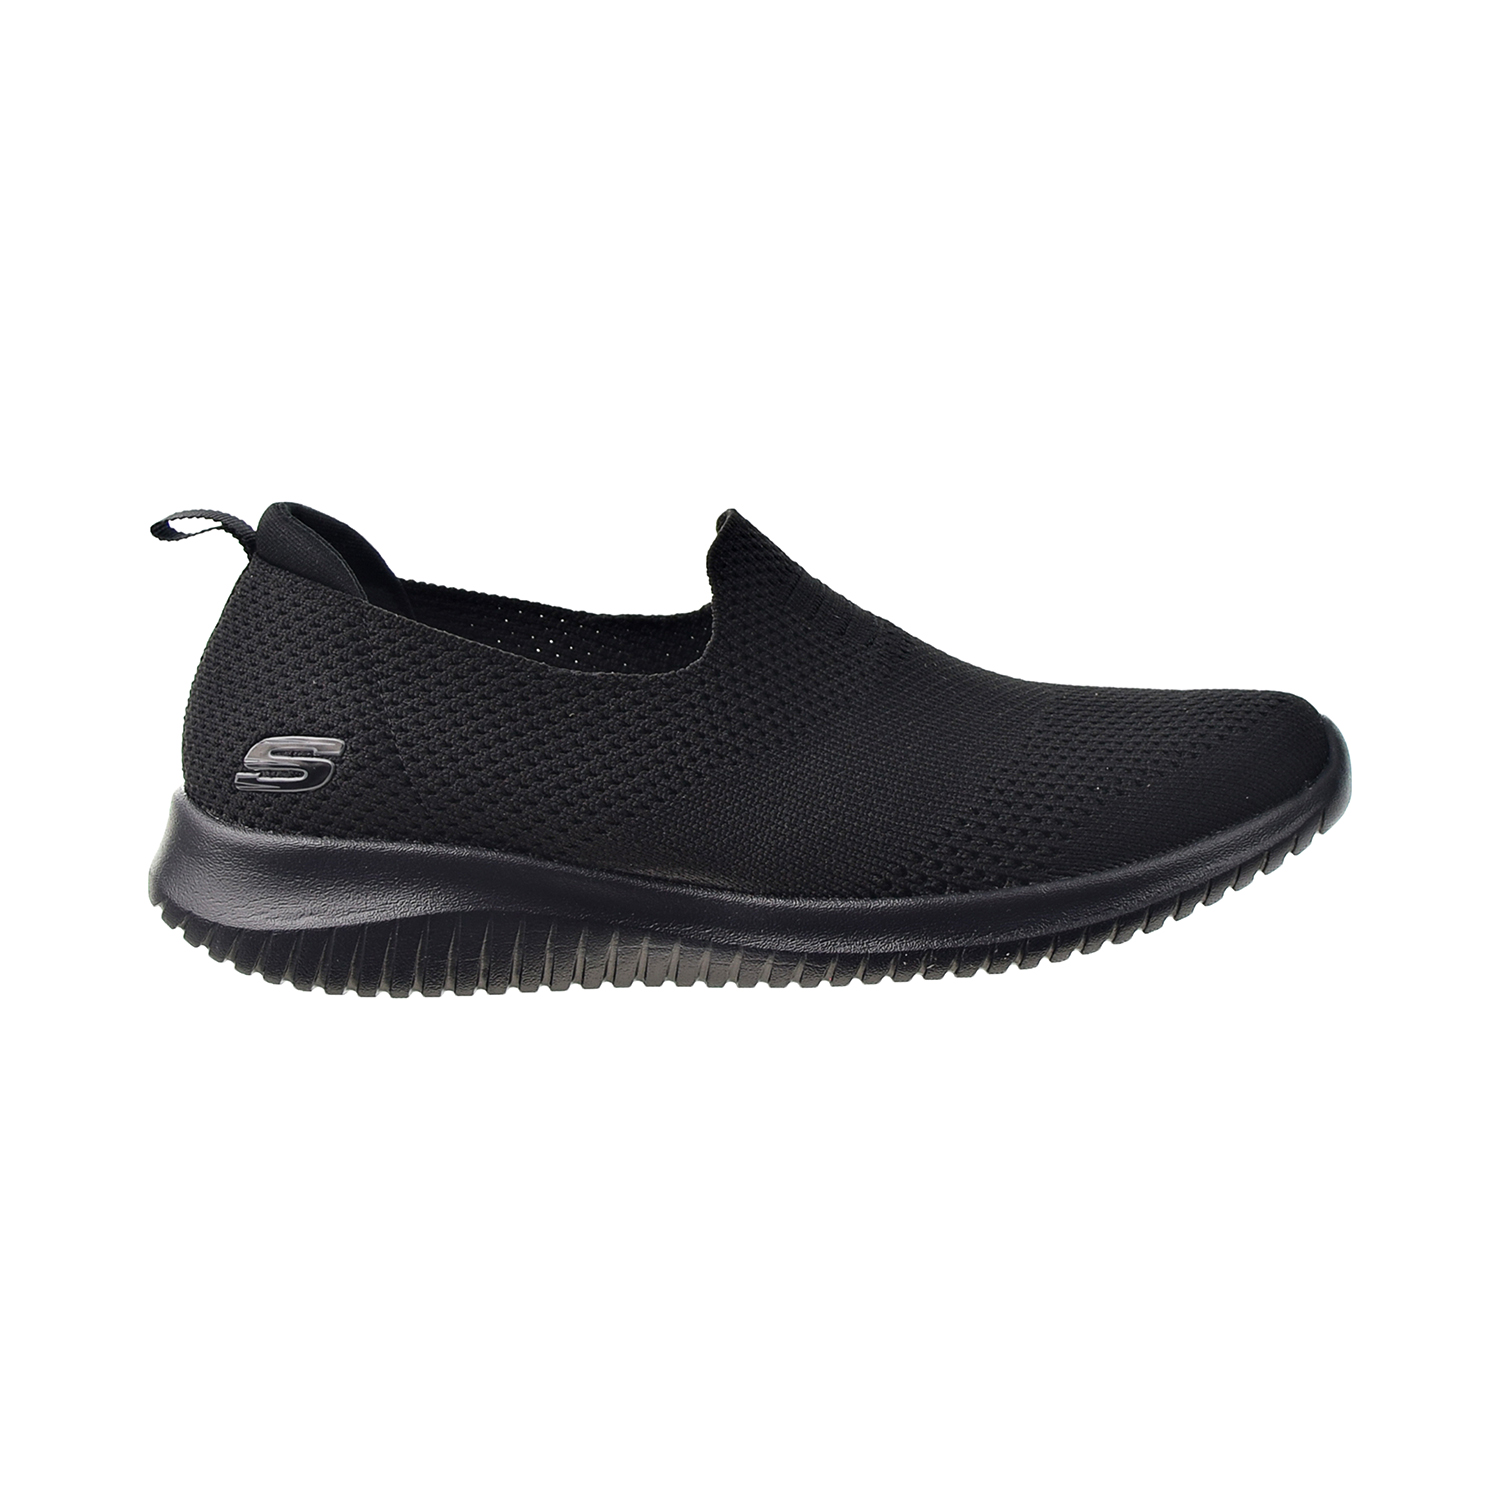 Skechers Ultra Flex-Harmonius Women's Shoes Black 13106-bkn